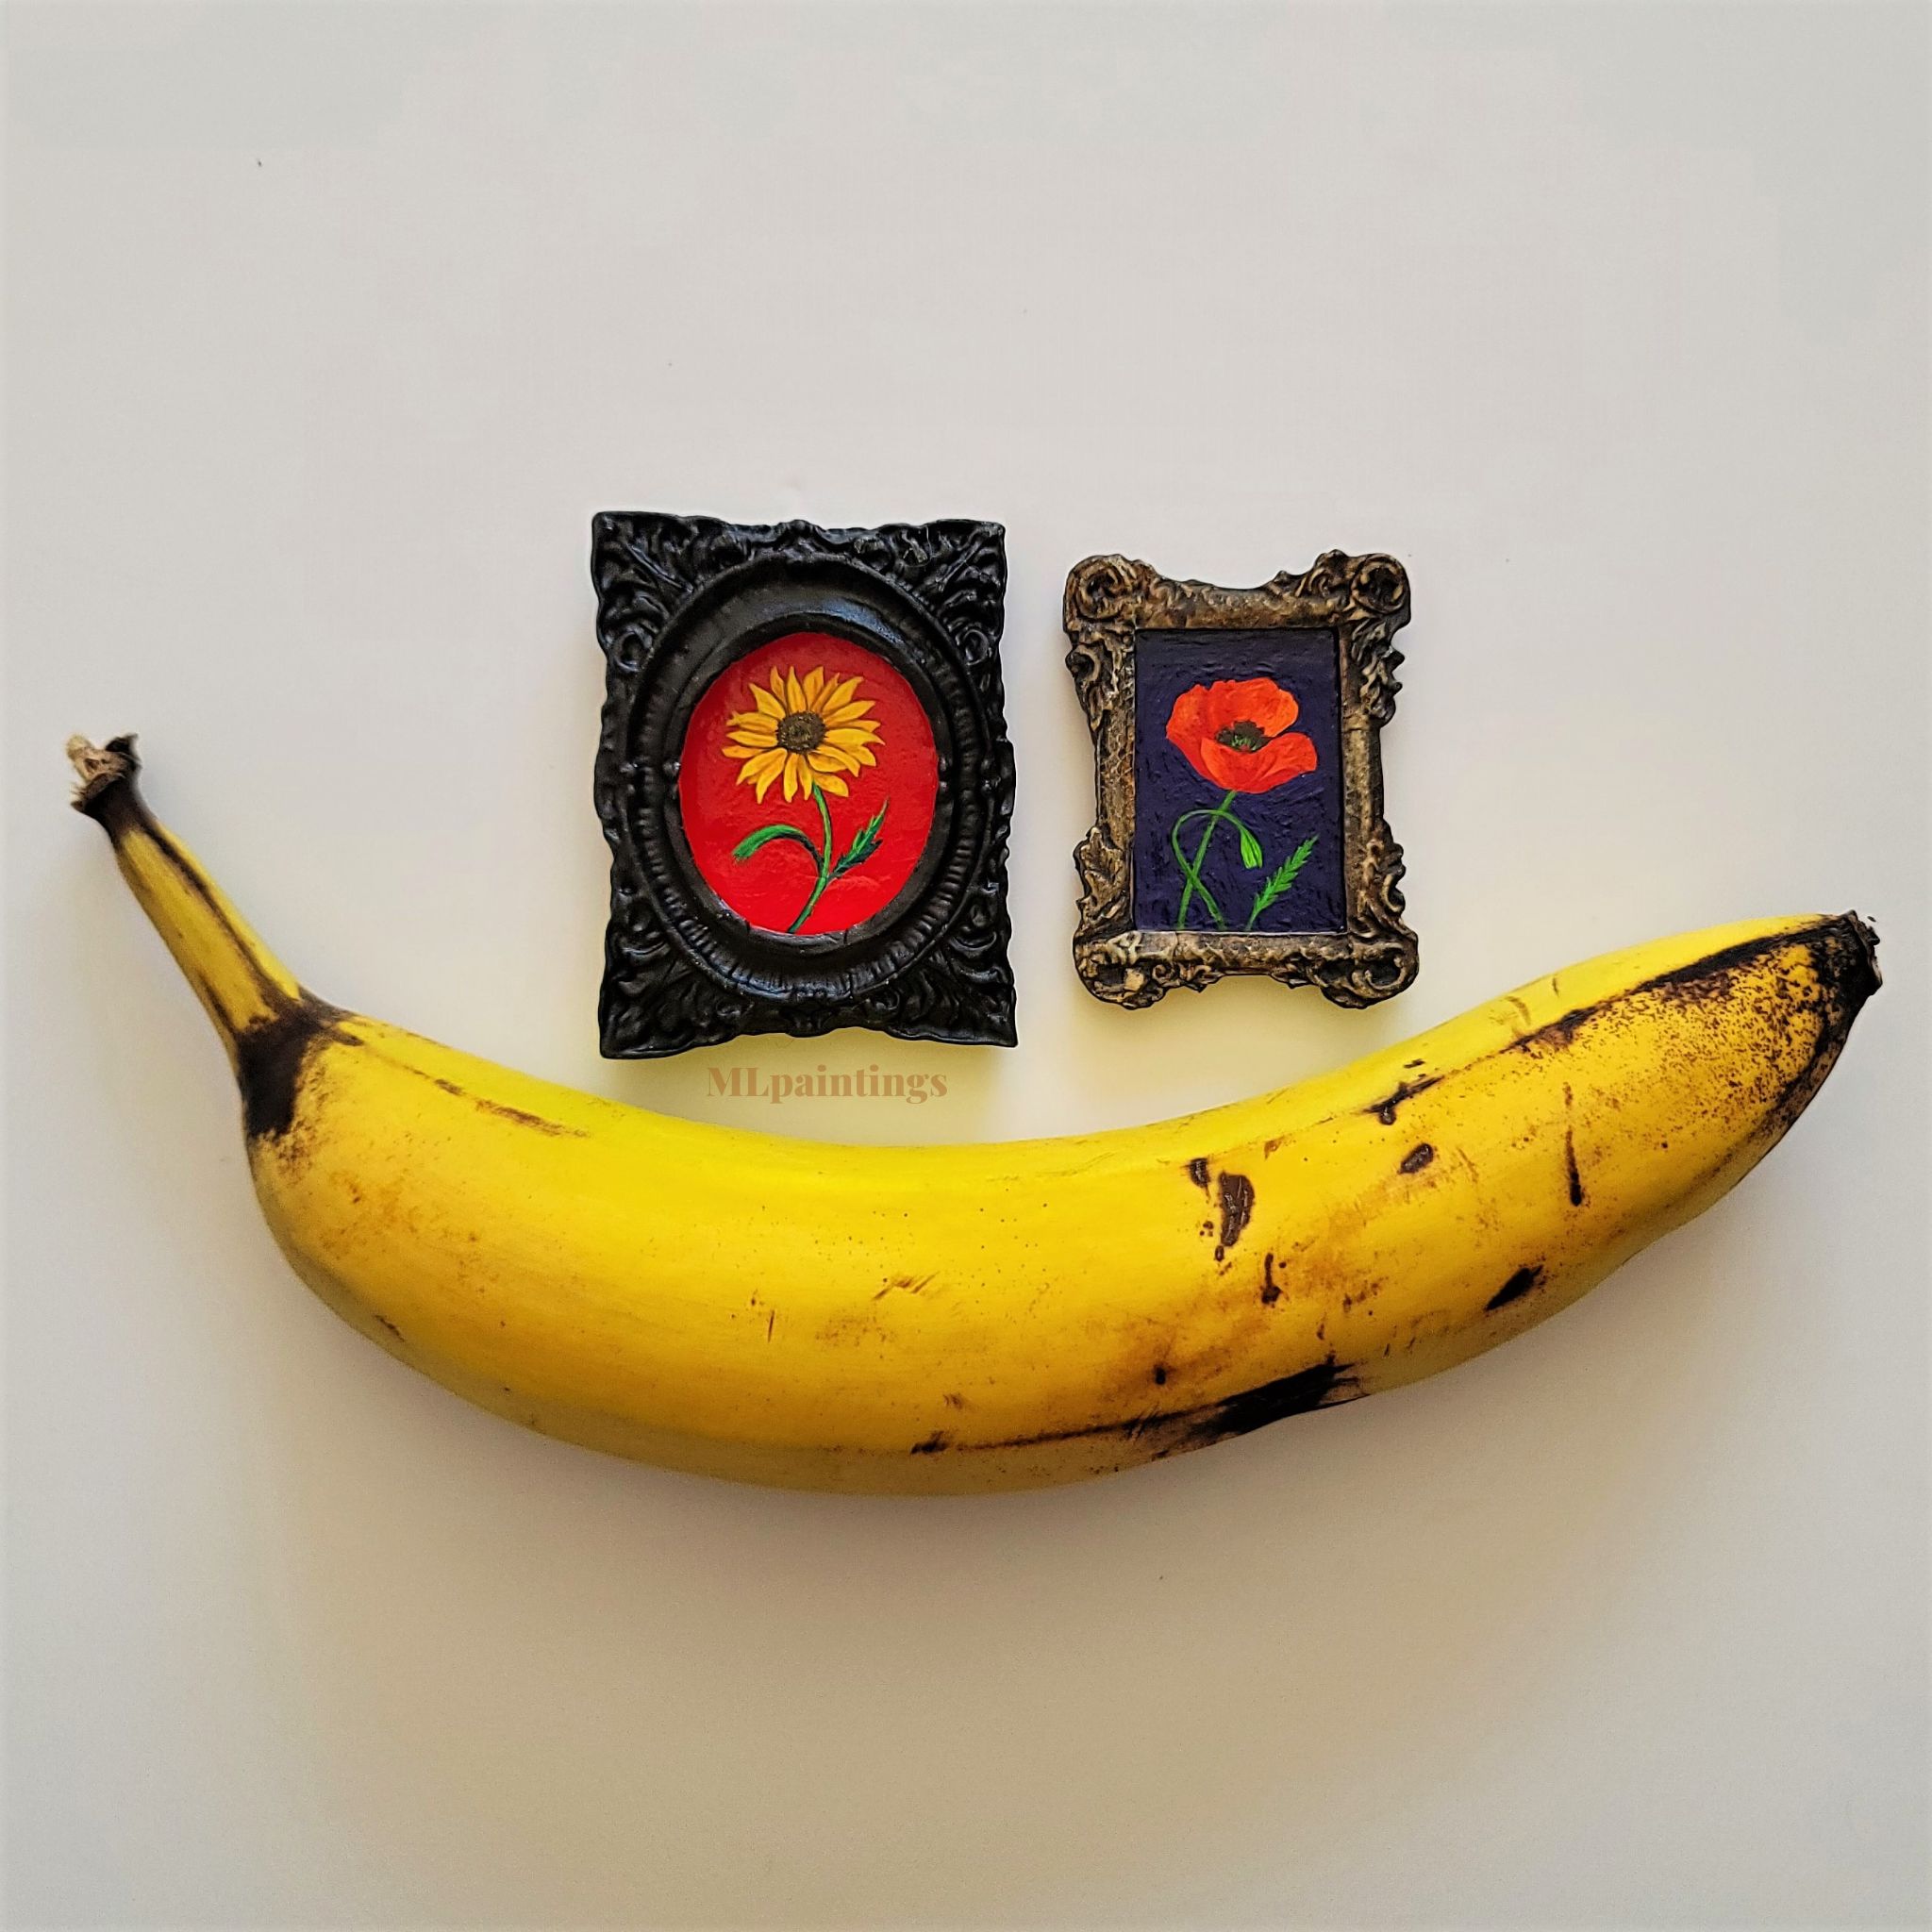 My dinky art work, banana for scale!